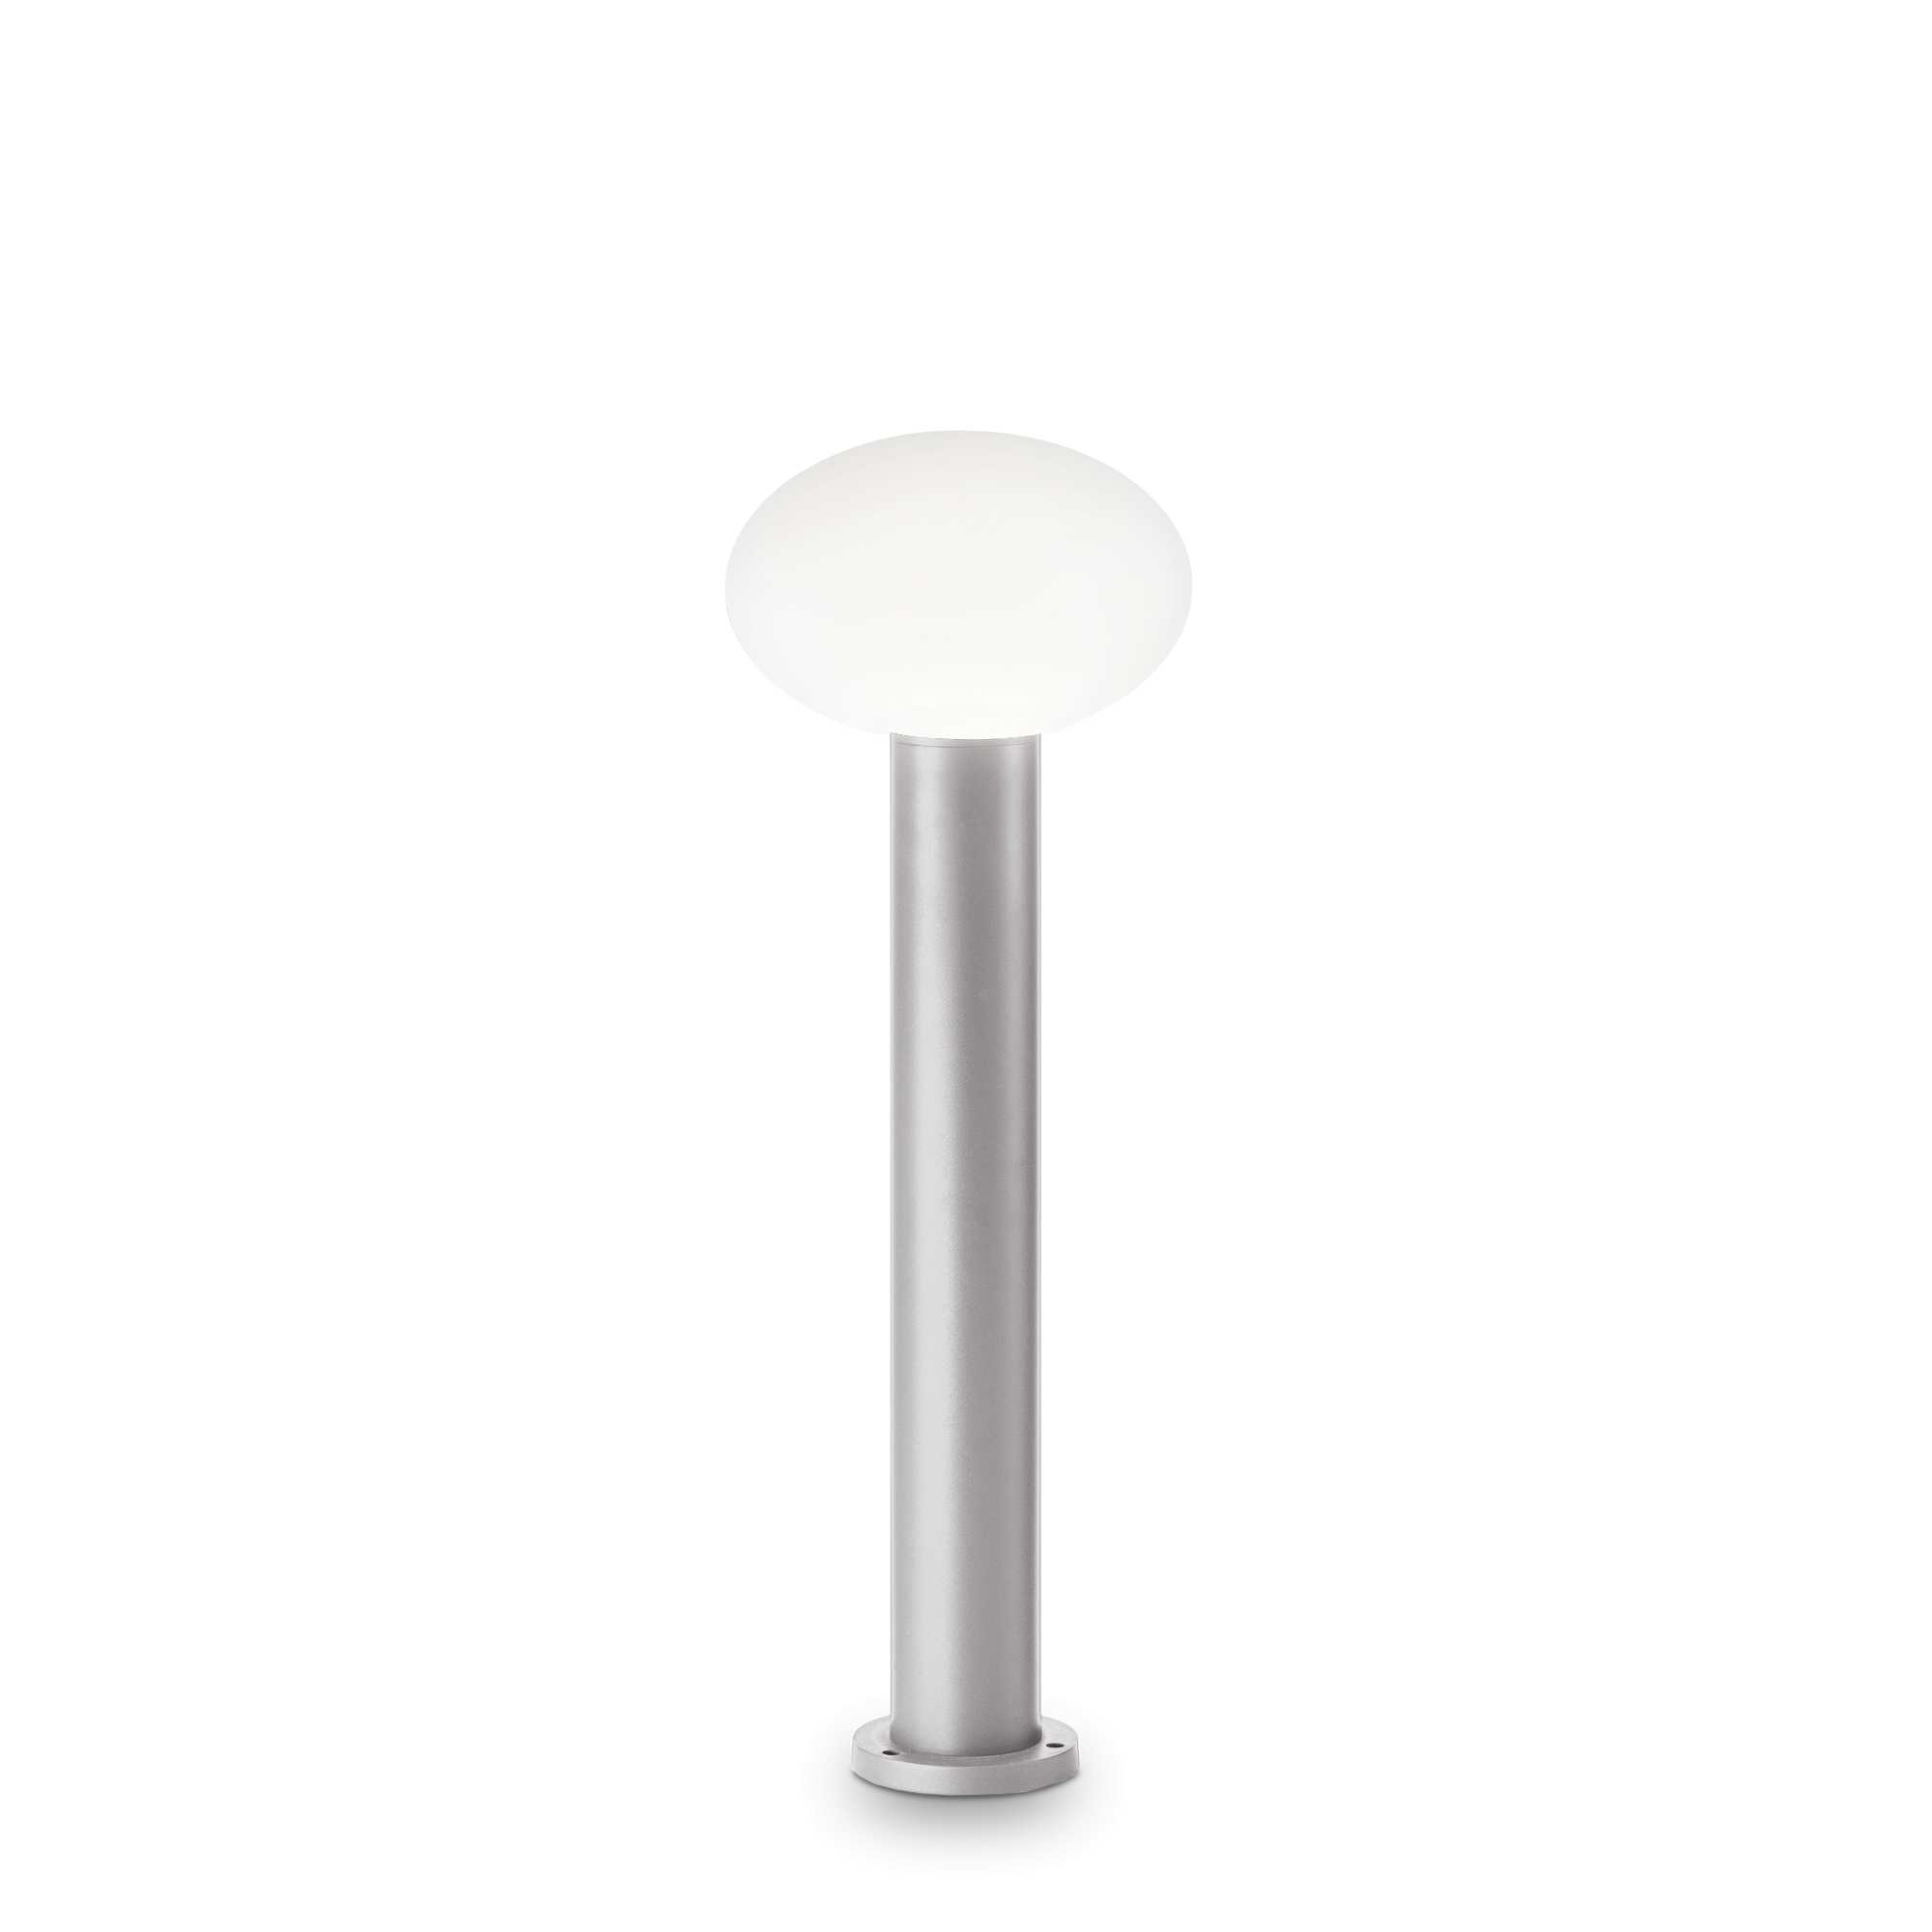 AD hotelska oprema Vanjska podna lampa Clio mpt1- Sive boje slika proizvoda